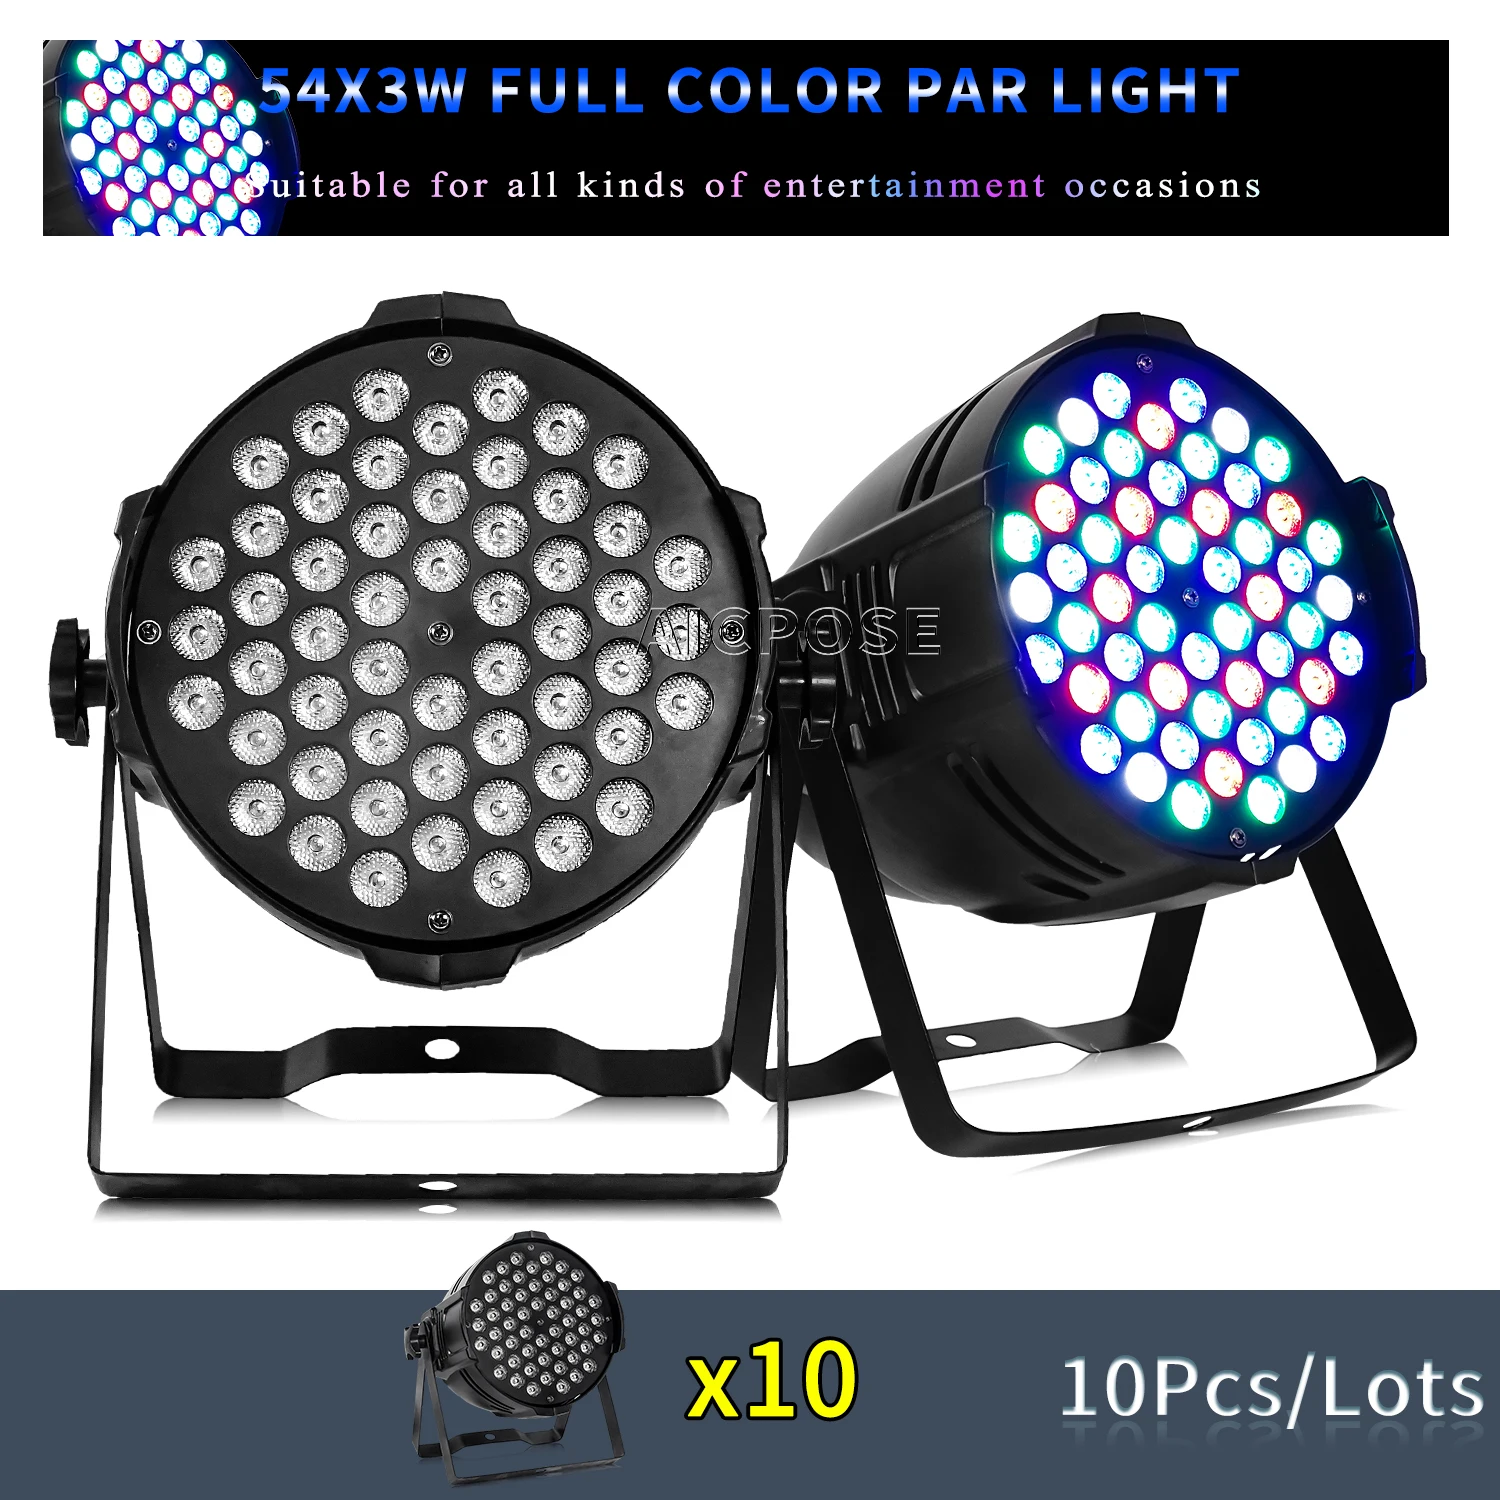 

10Pcs/Lots 54x3W RGBW Color Light RGB 3 in 1 LED Par Light DMX512 Control DJ Disco Equipment Party Bar Dance Floor Lighting